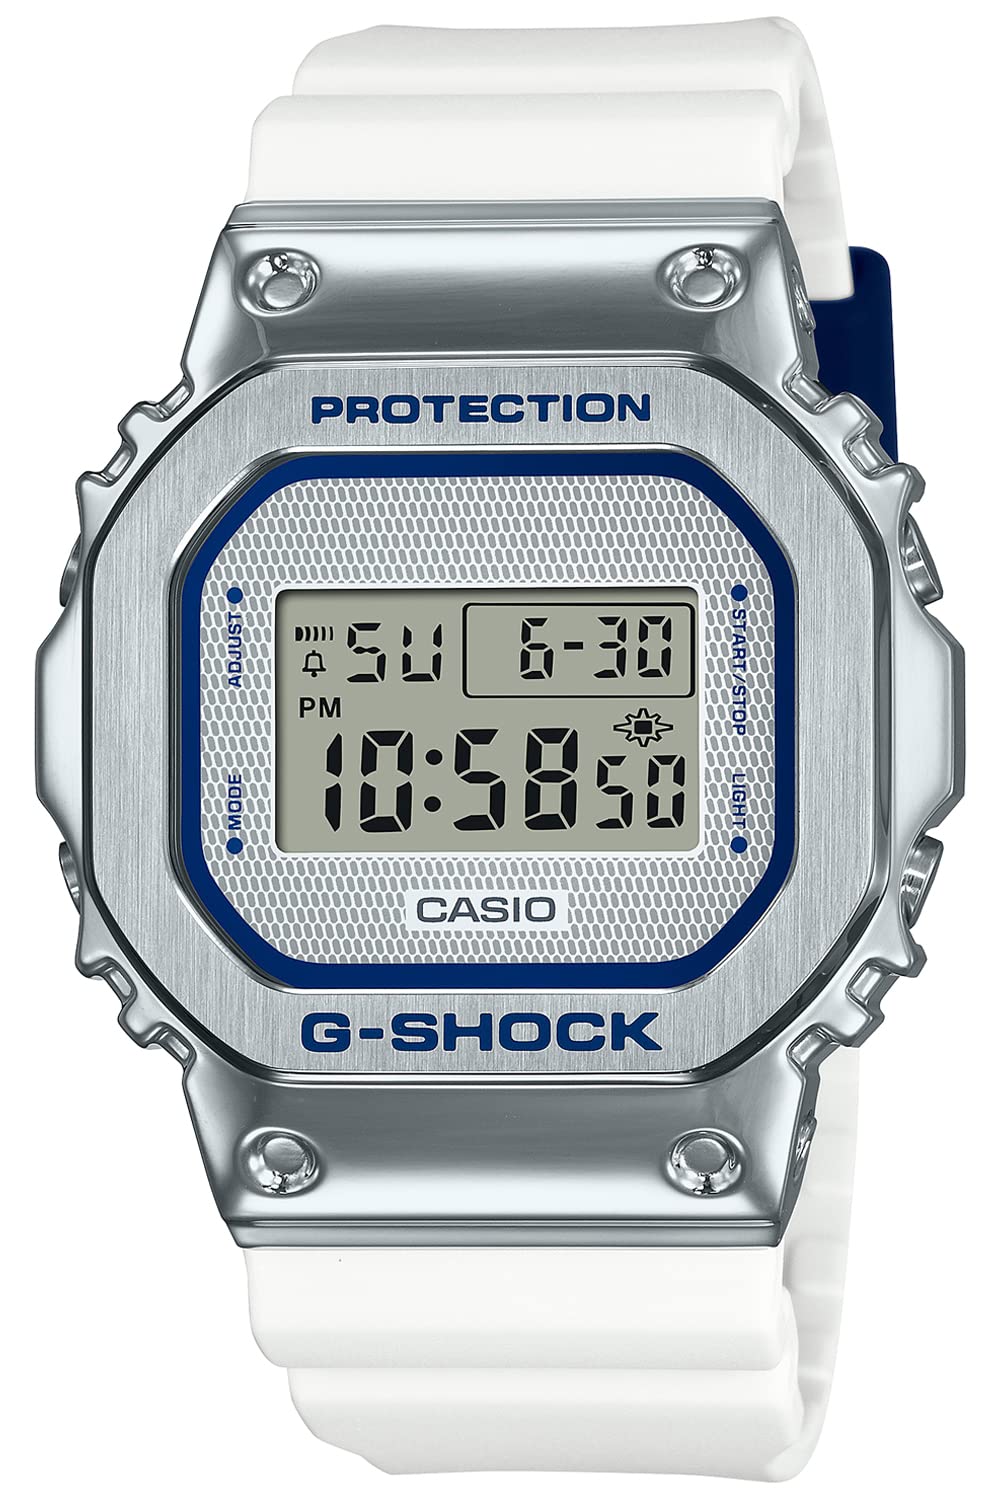 Casio G-Shock G Shock GM-5600LC-7JF [G-Shock Precious Heart Selection] Men's Watch Shipped from Japan Nov 2022 Model